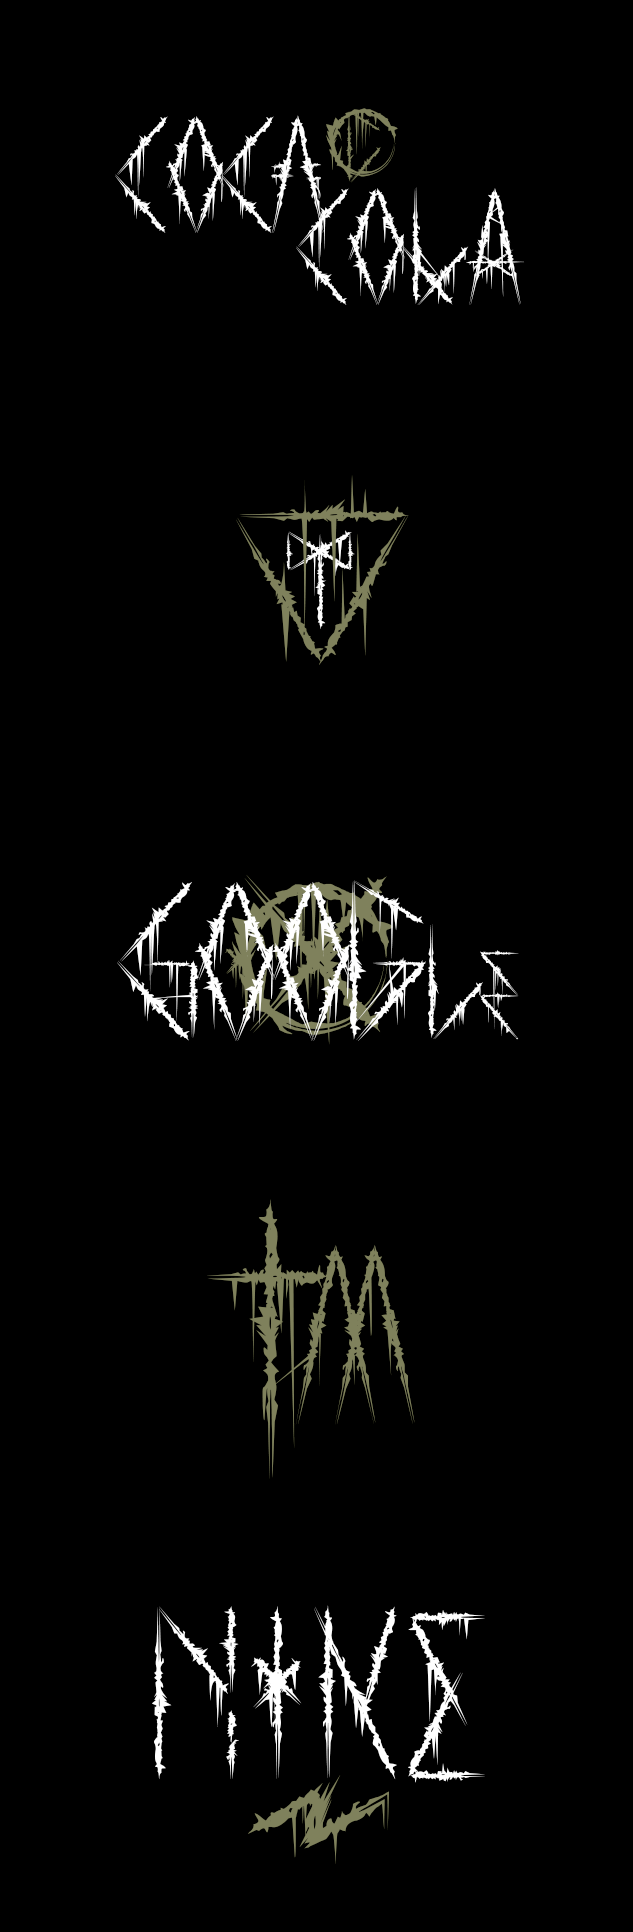 font fonts typo typographism metal black metal tribute Display display font rust metal music black metal logo logo logo type loud